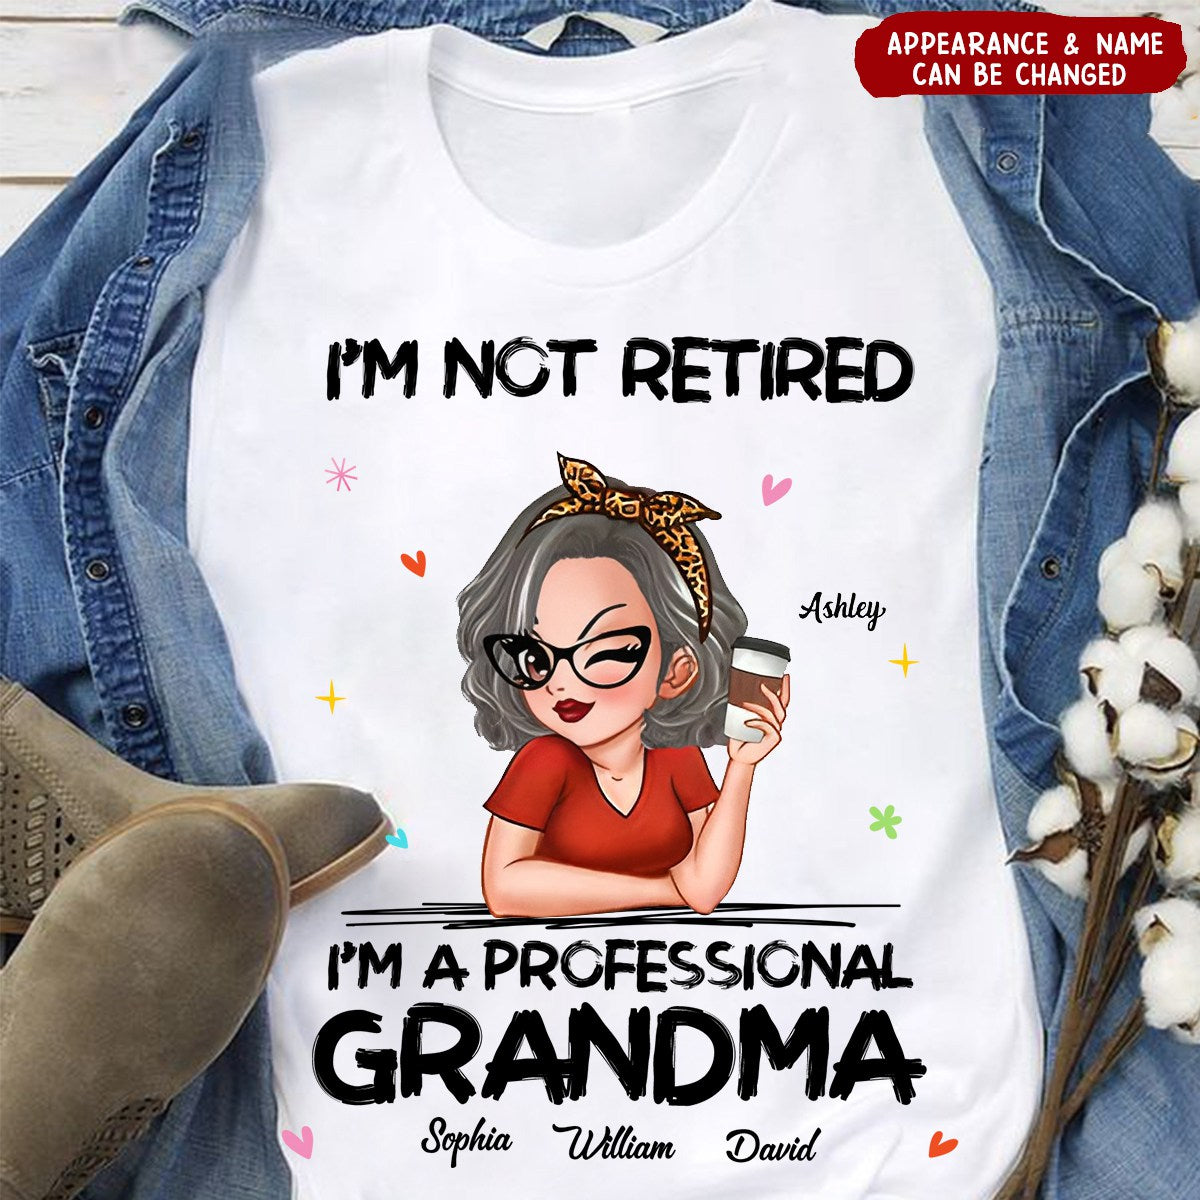 I'm Not Retired I'm A Professional Grandma Personalized T-Shirt